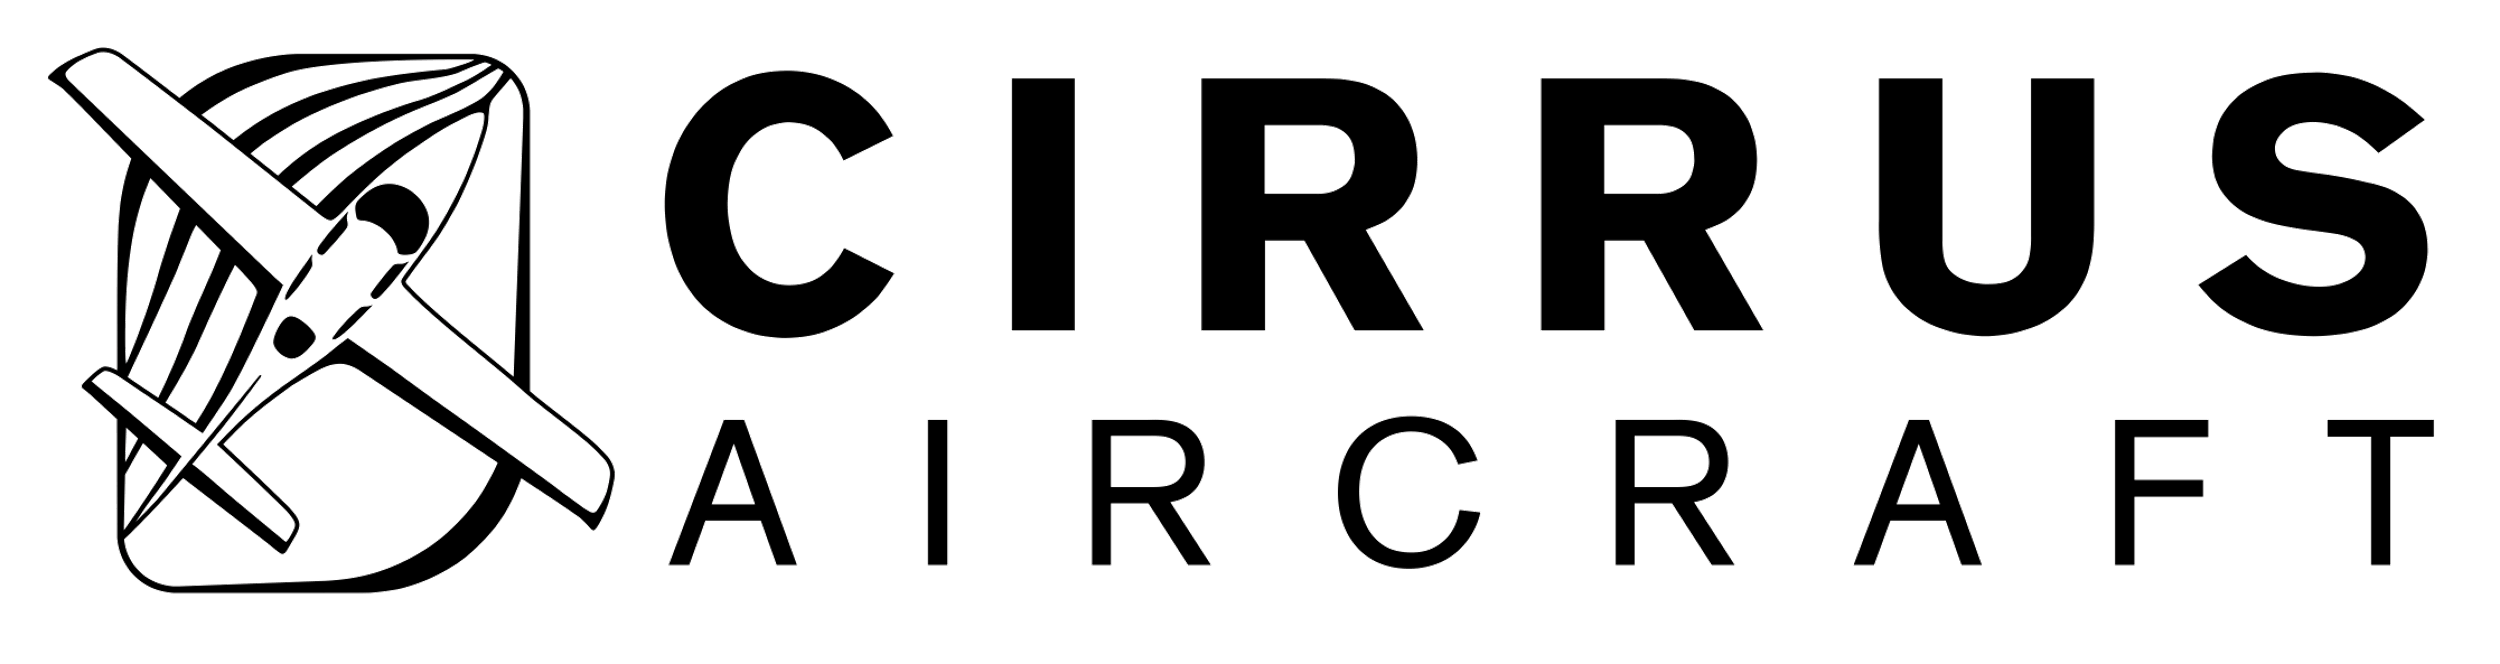 Cirrus Logo - Cirrus Aircraft – Logos Download